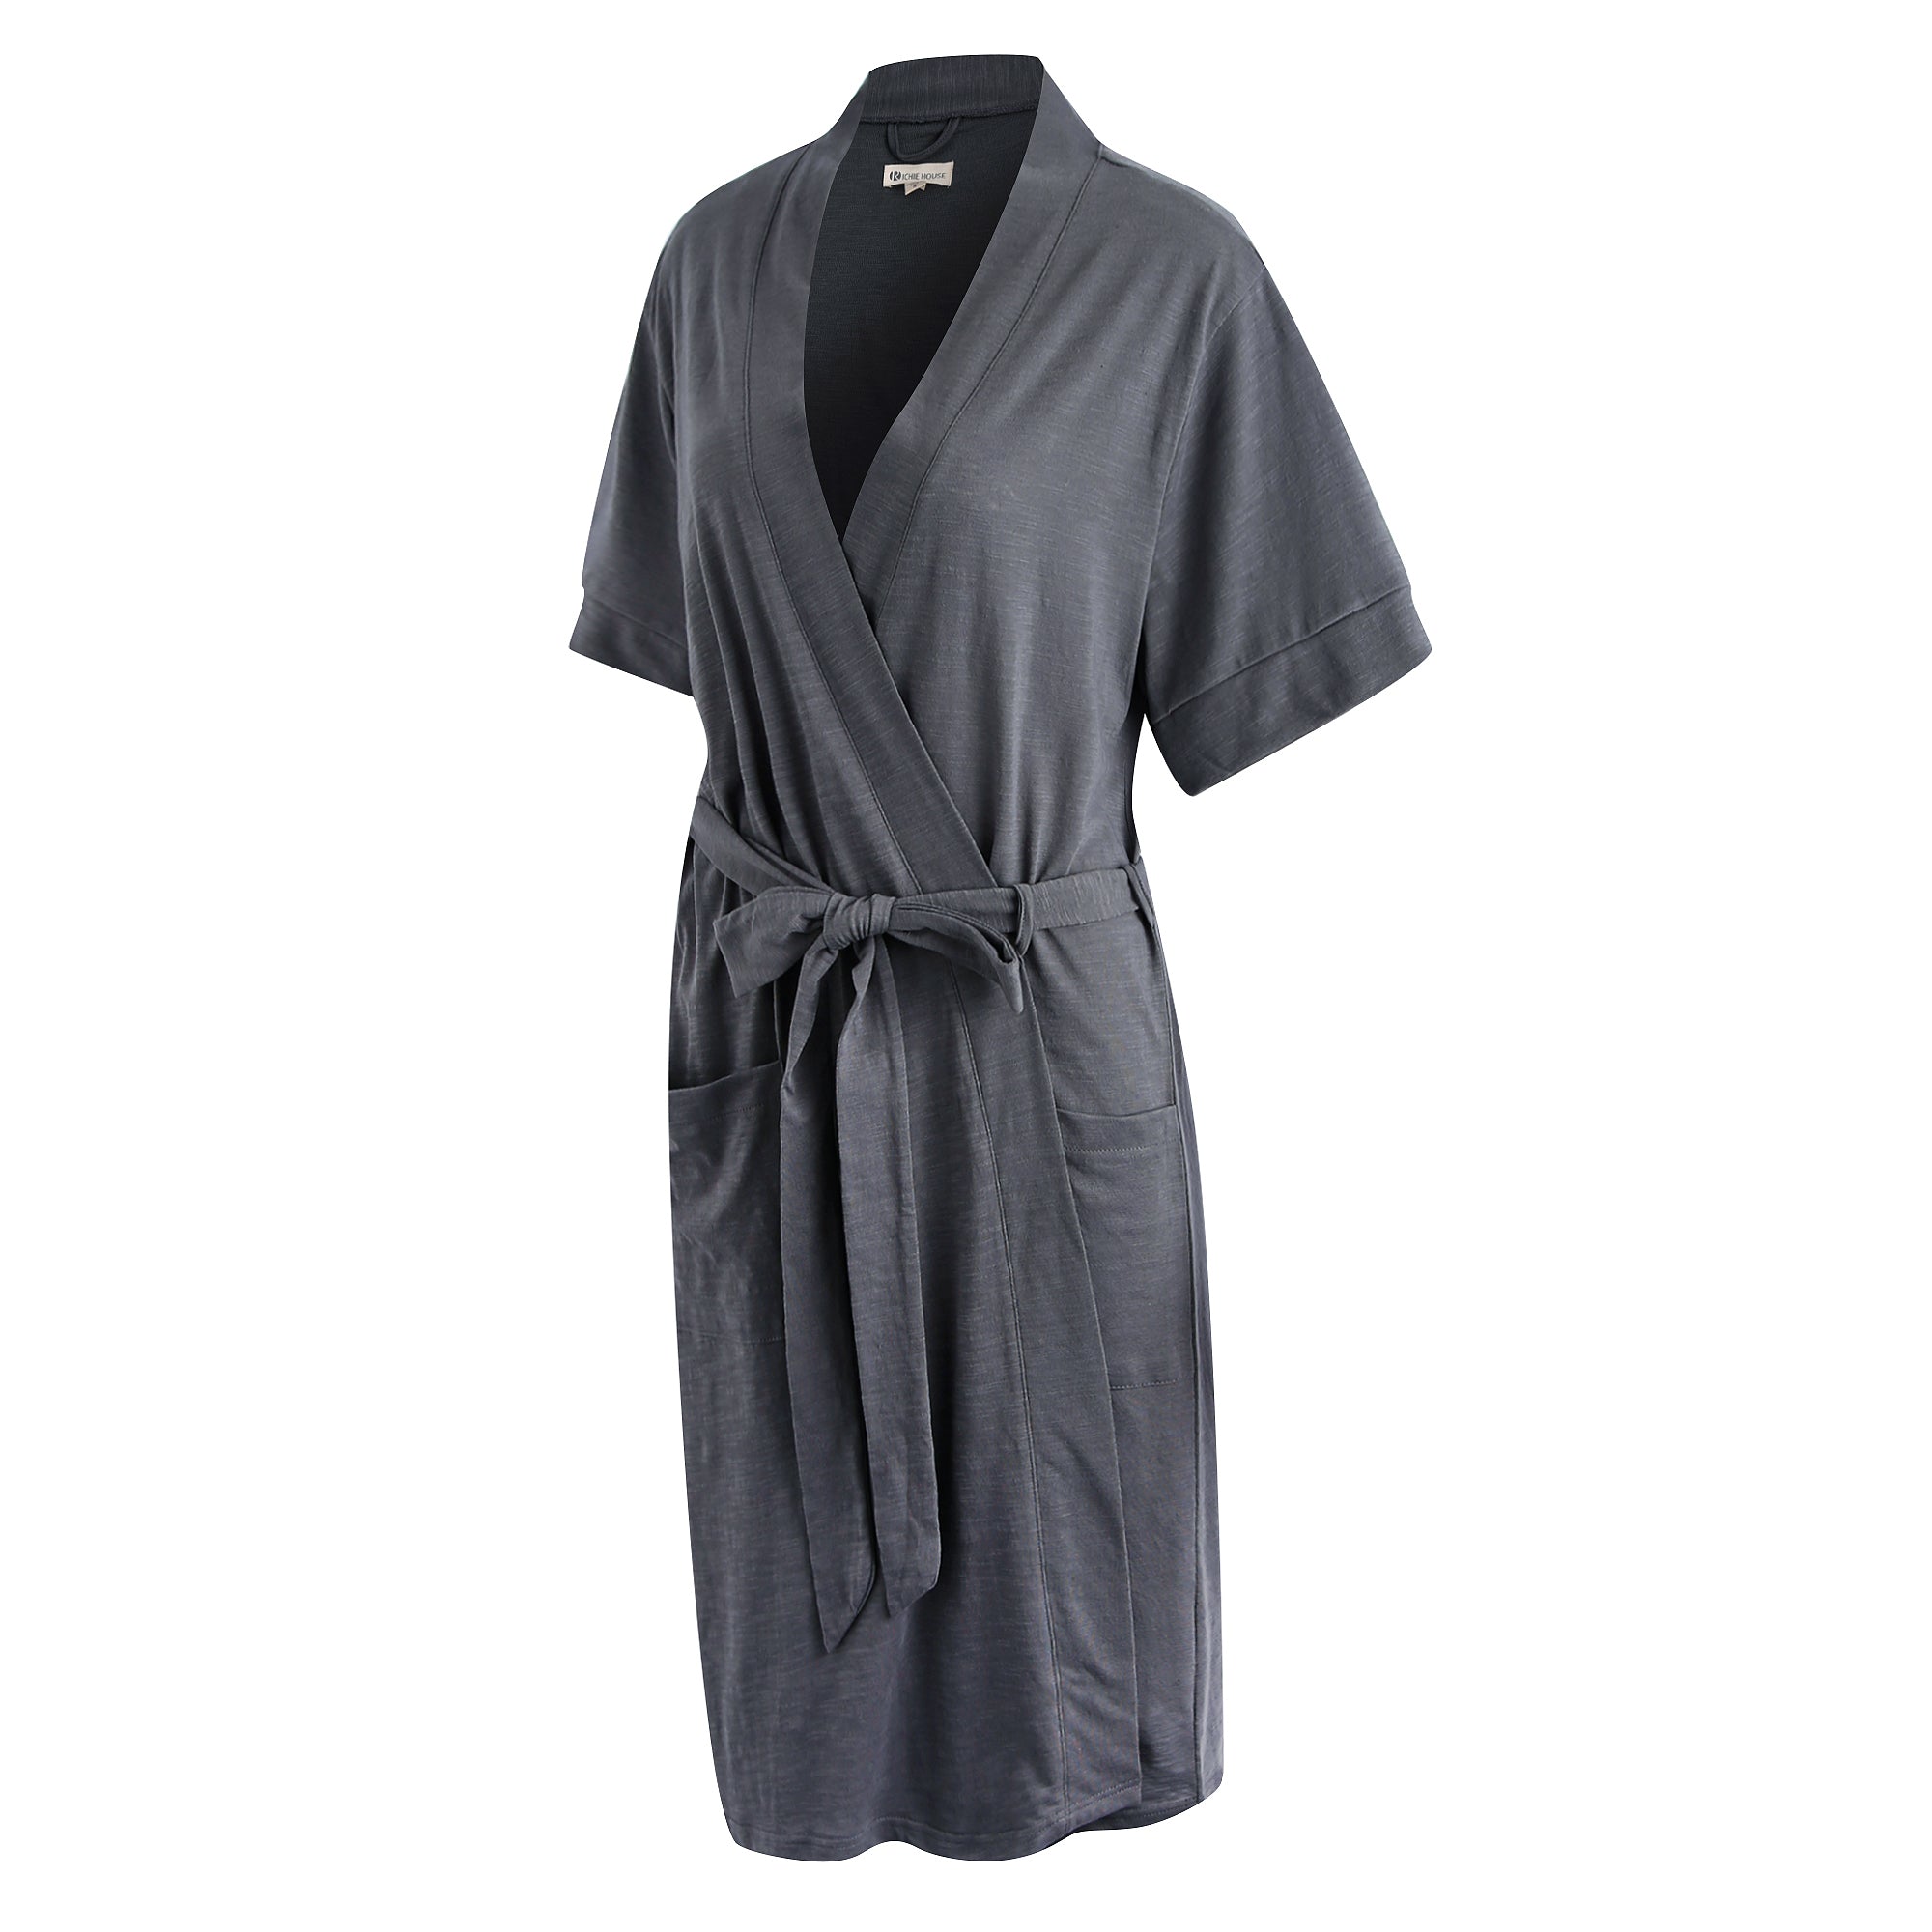 Sexy Robe Gown 2pcs V Neck Nightdress Short Sleep Dress Home Clothing Lace  Edge Nightwear Kimono Ice Silk Night Gown Homedress - Robe & Gown Sets -  AliExpress